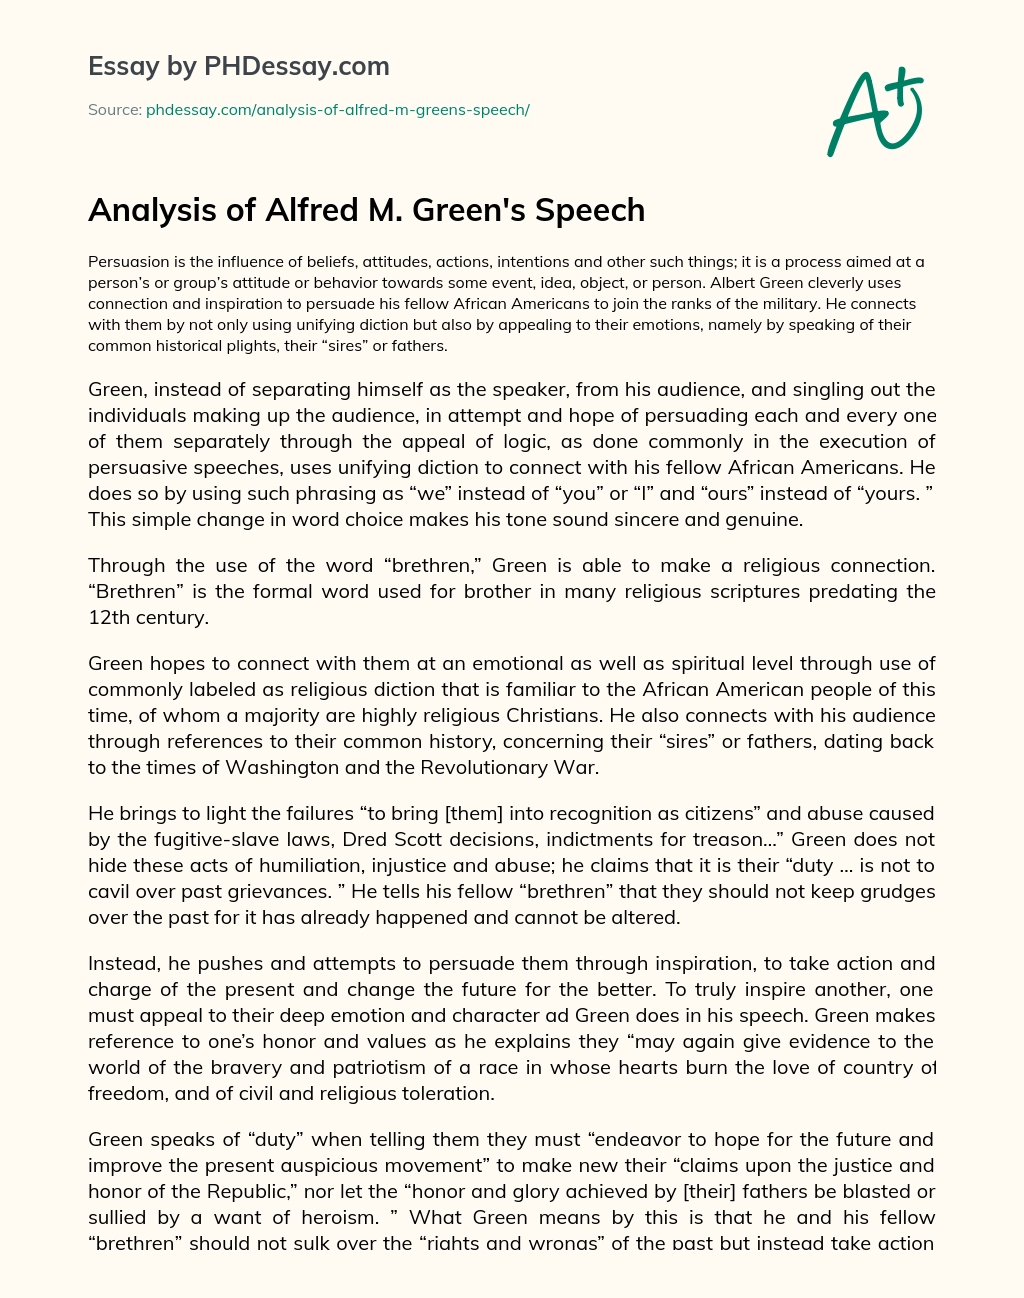 Analysis of Alfred M. Green’s Speech essay